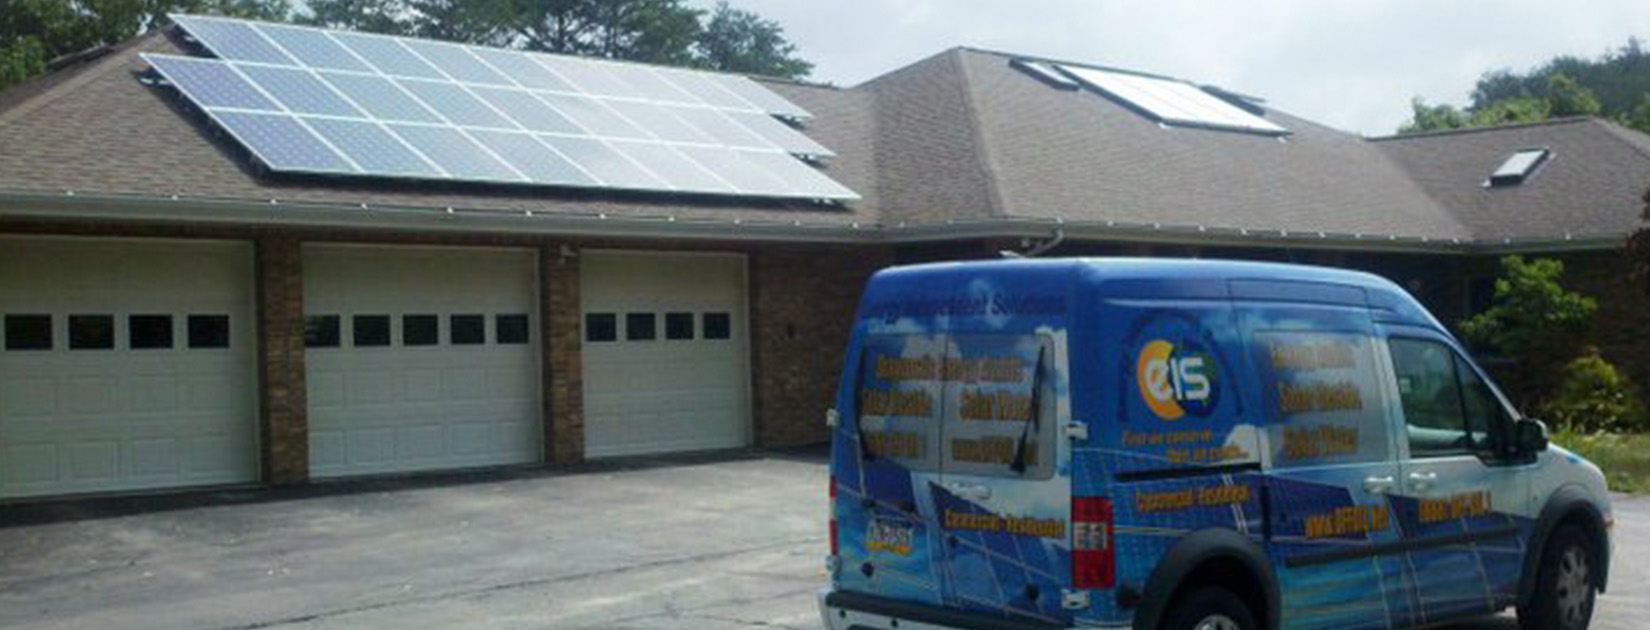 pittsburgh residential solar installation